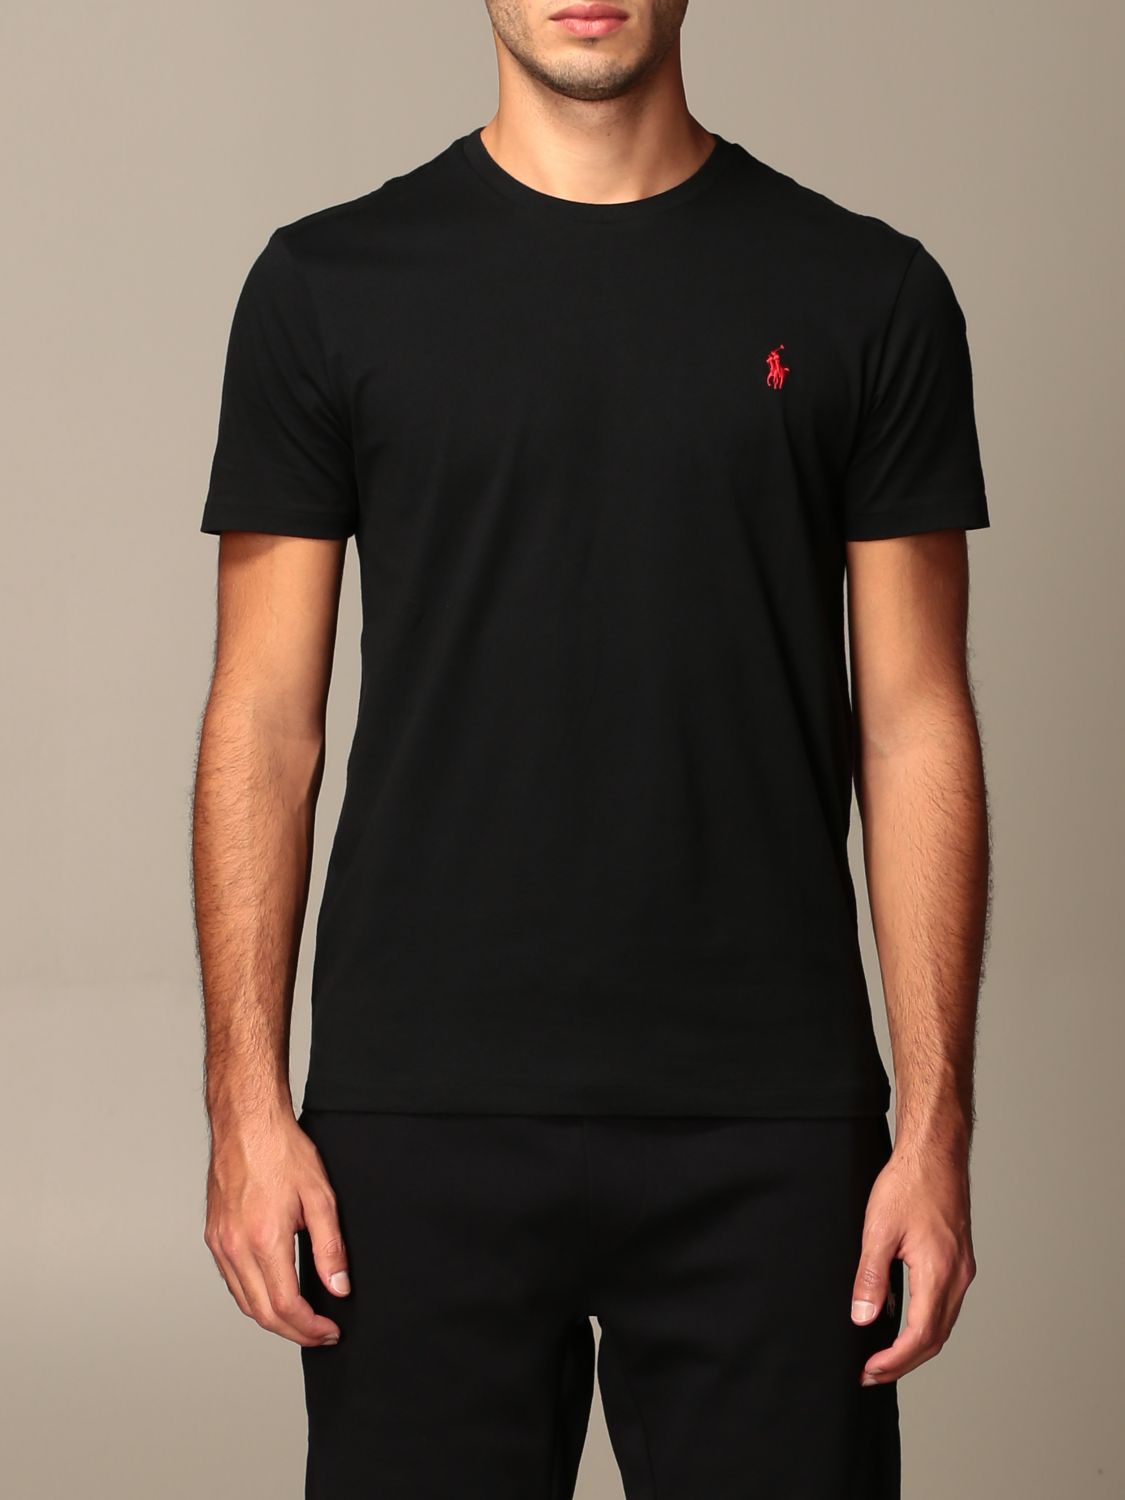 Tijdreeksen nationalisme Uitpakken Polo Ralph Lauren Outlet: t-shirt with logo - Black | Polo Ralph Lauren t- shirt 710680785 online on GIGLIO.COM